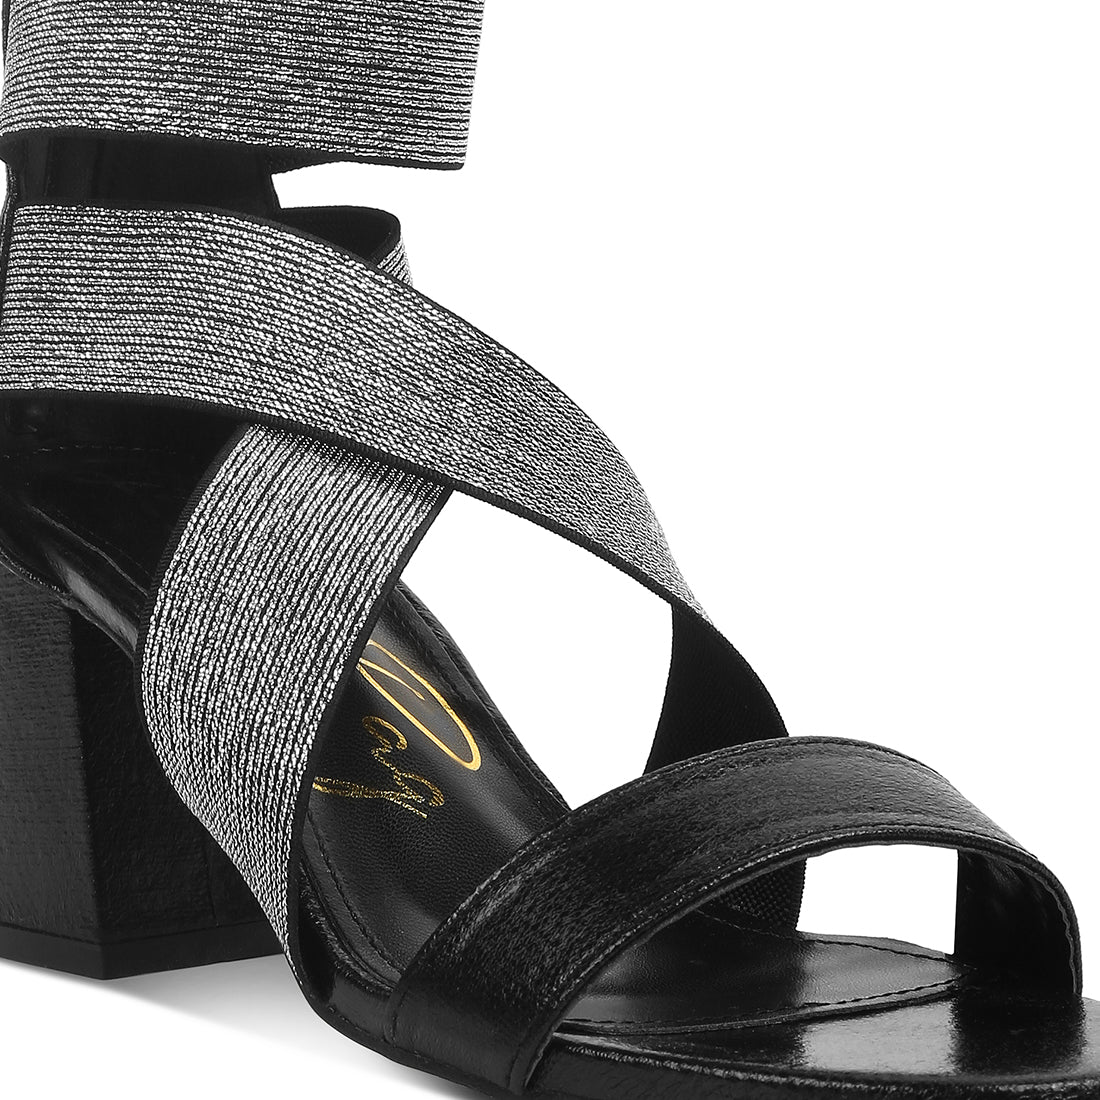 elasticated strappy block heel sandals#color_black